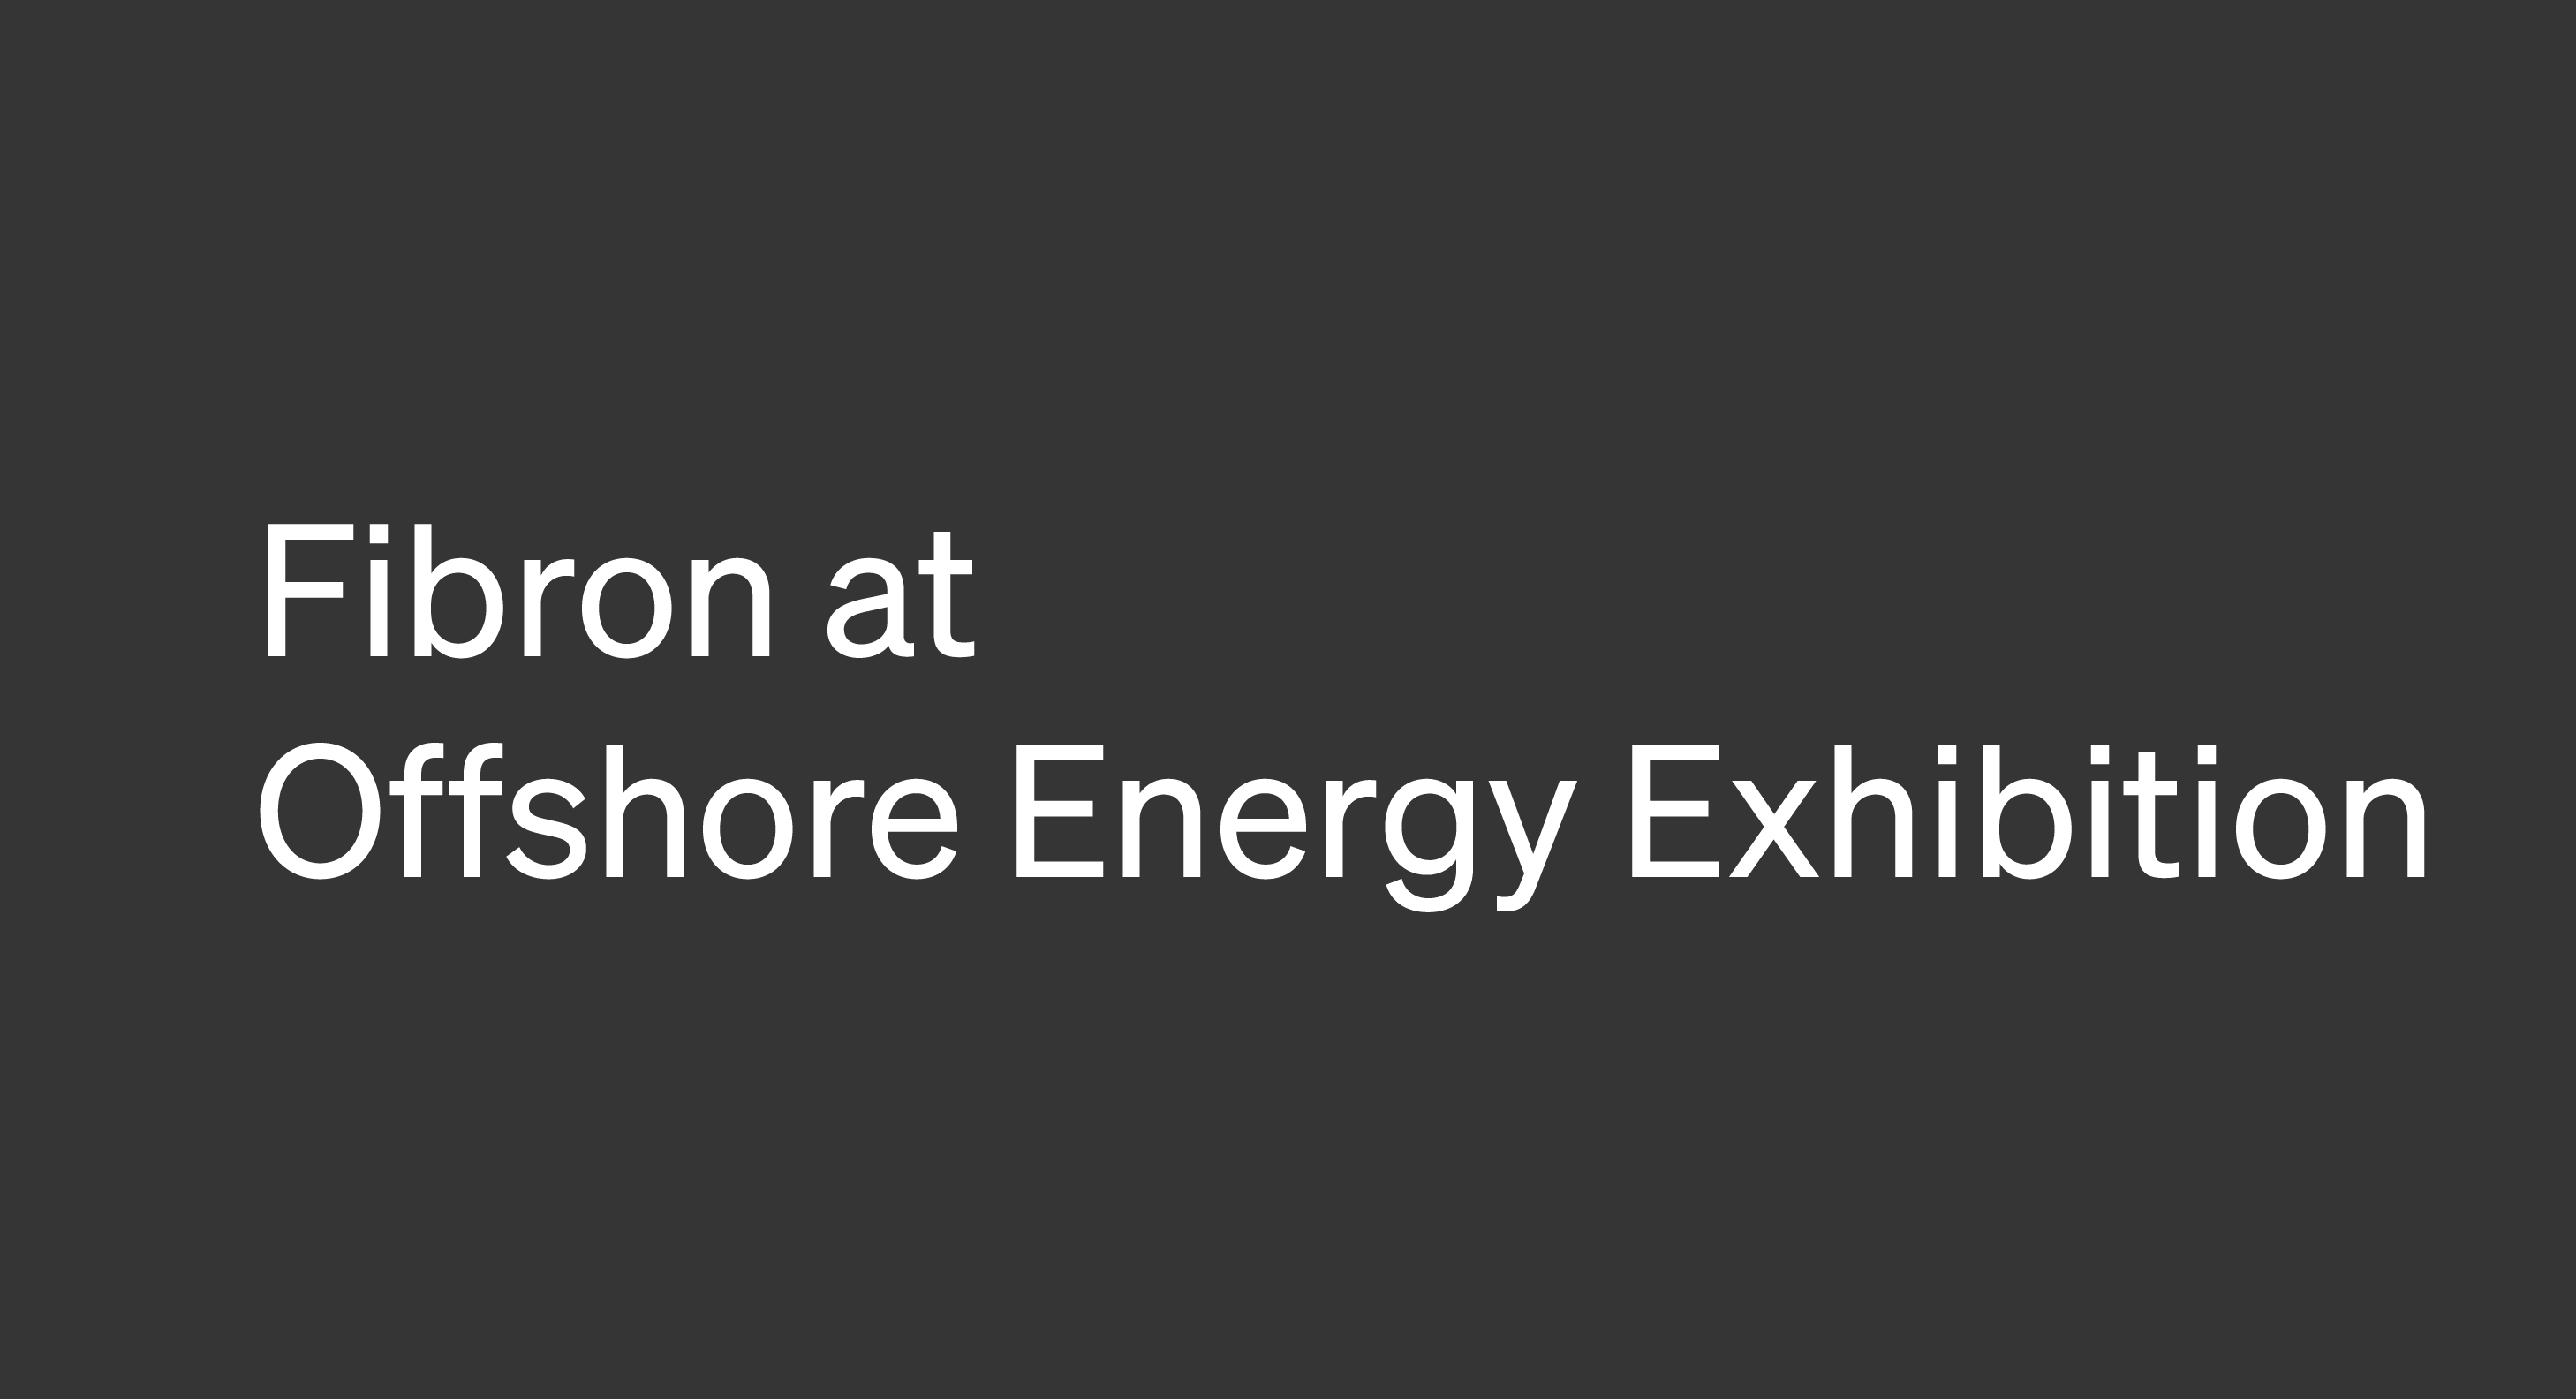 Offshore Energy Exhibition